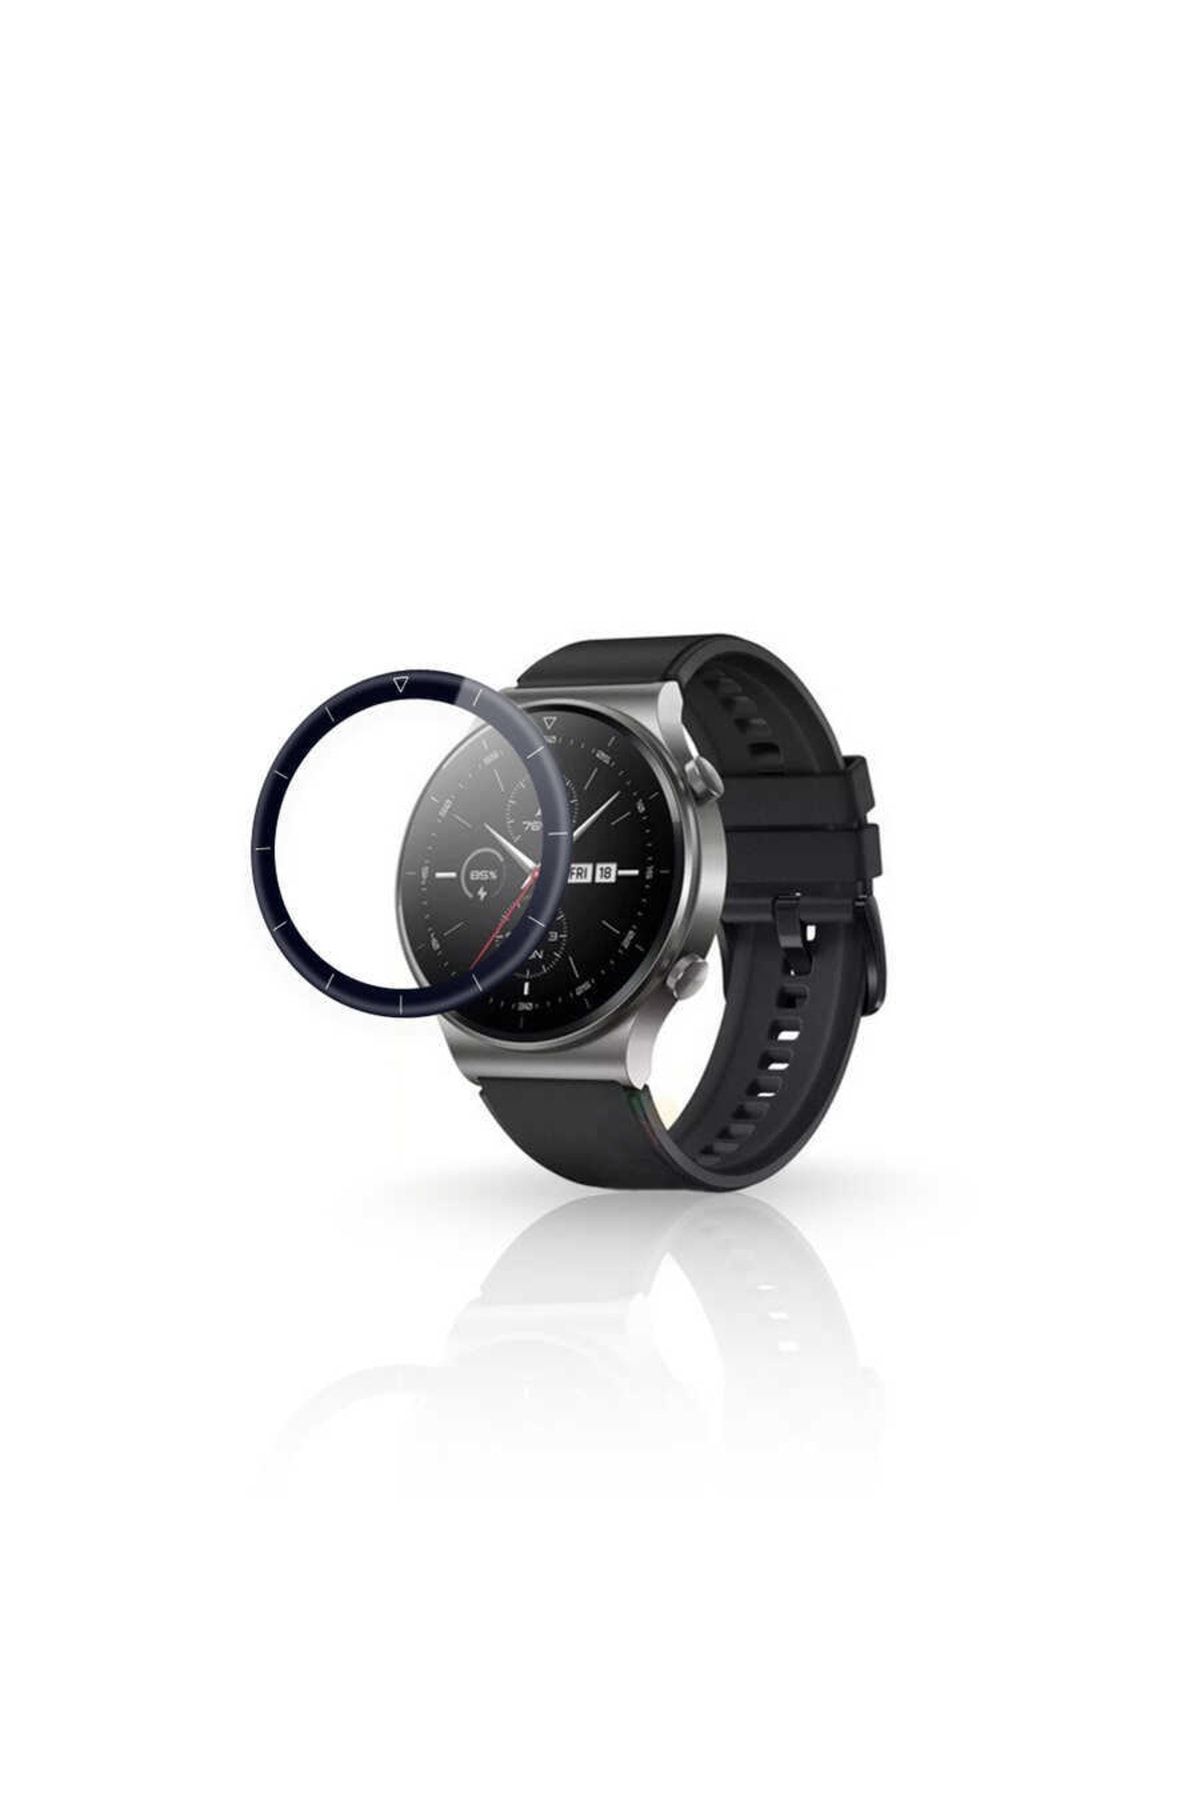 Huawei Watch Gt2 Pro Birebir Uyumlu Tam Kaplayan Slim Pet Ekran Koruyucu